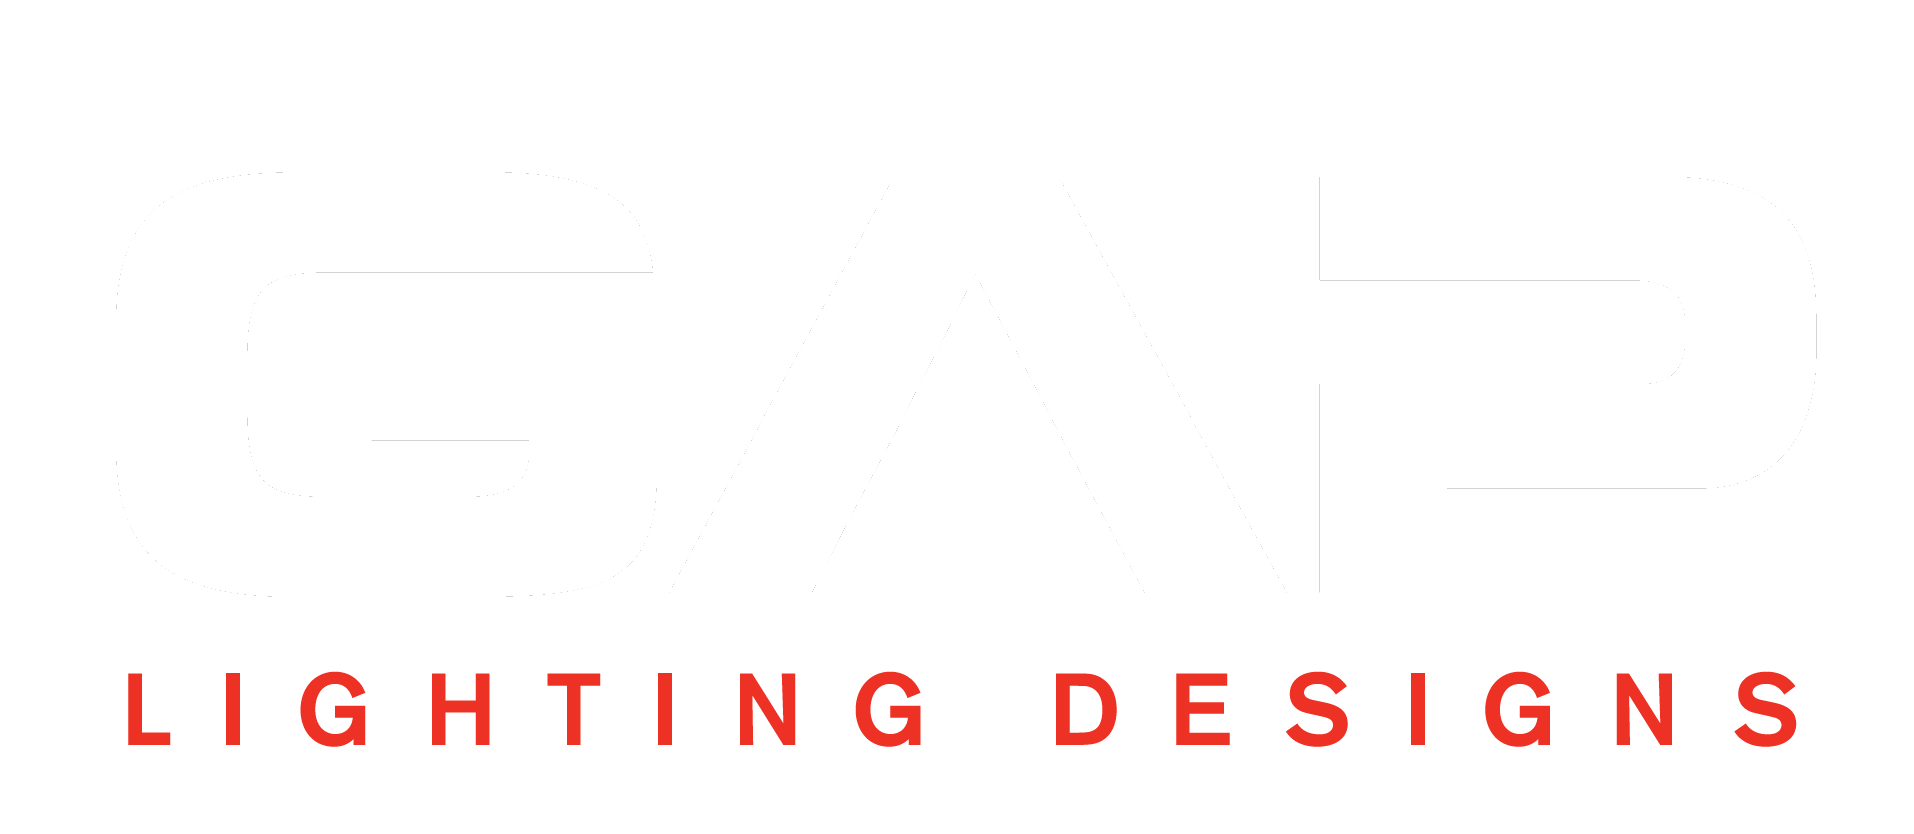 Gap Lighting Designs